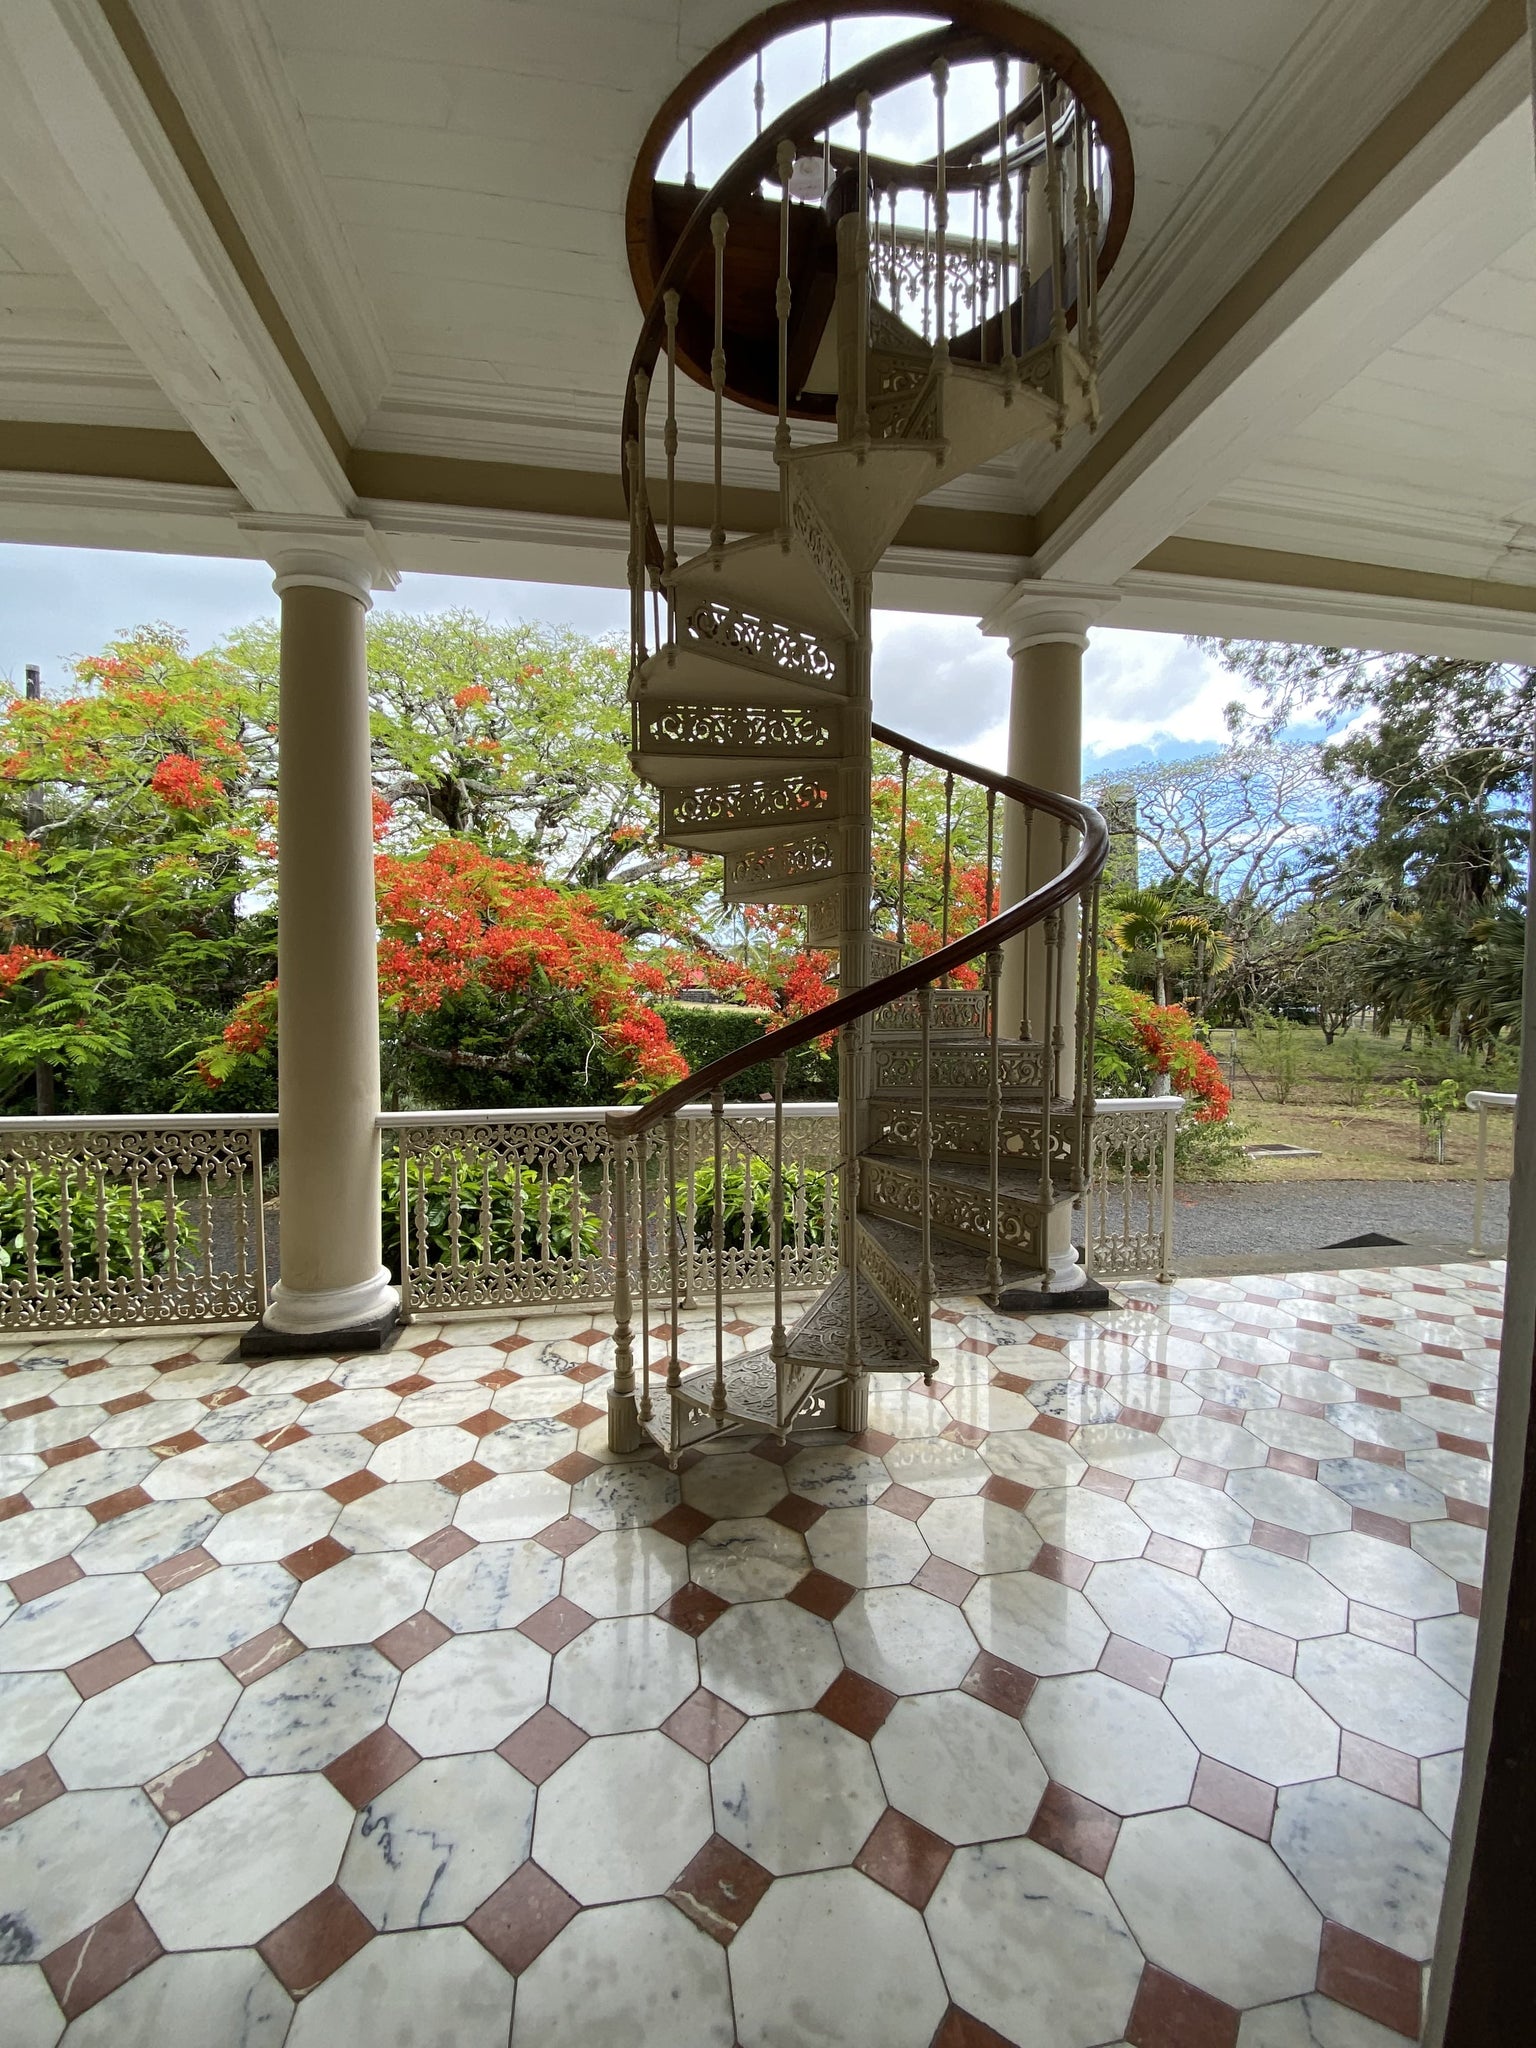 Chateau de Labourdonnais in Mauritius with a beautiful spiral staircase